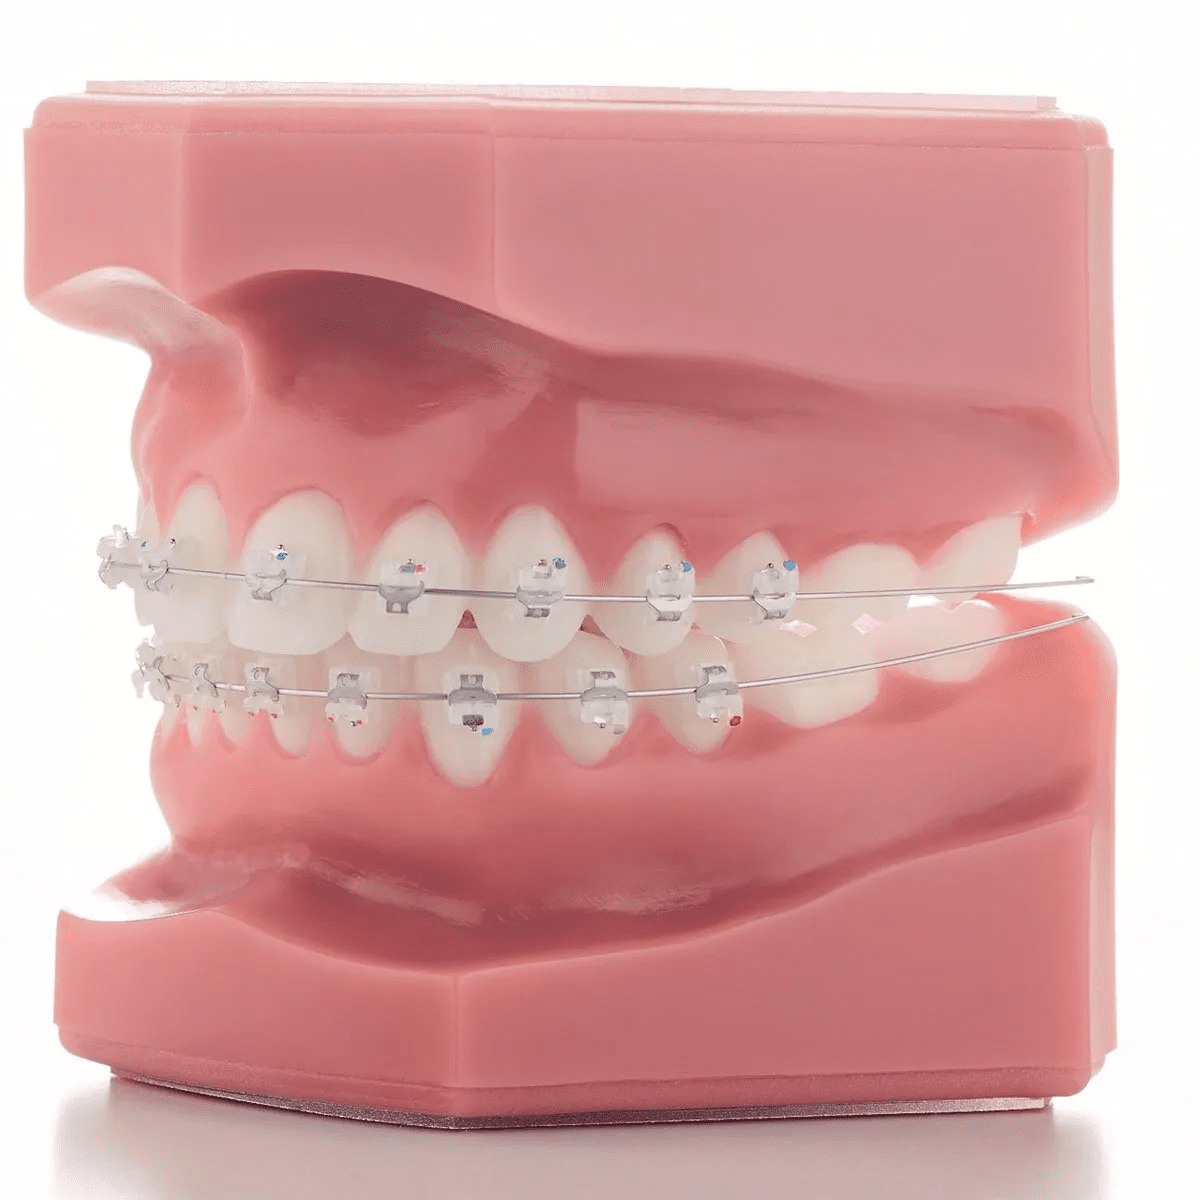 Adult orthodontics: Braces vs Invisalign